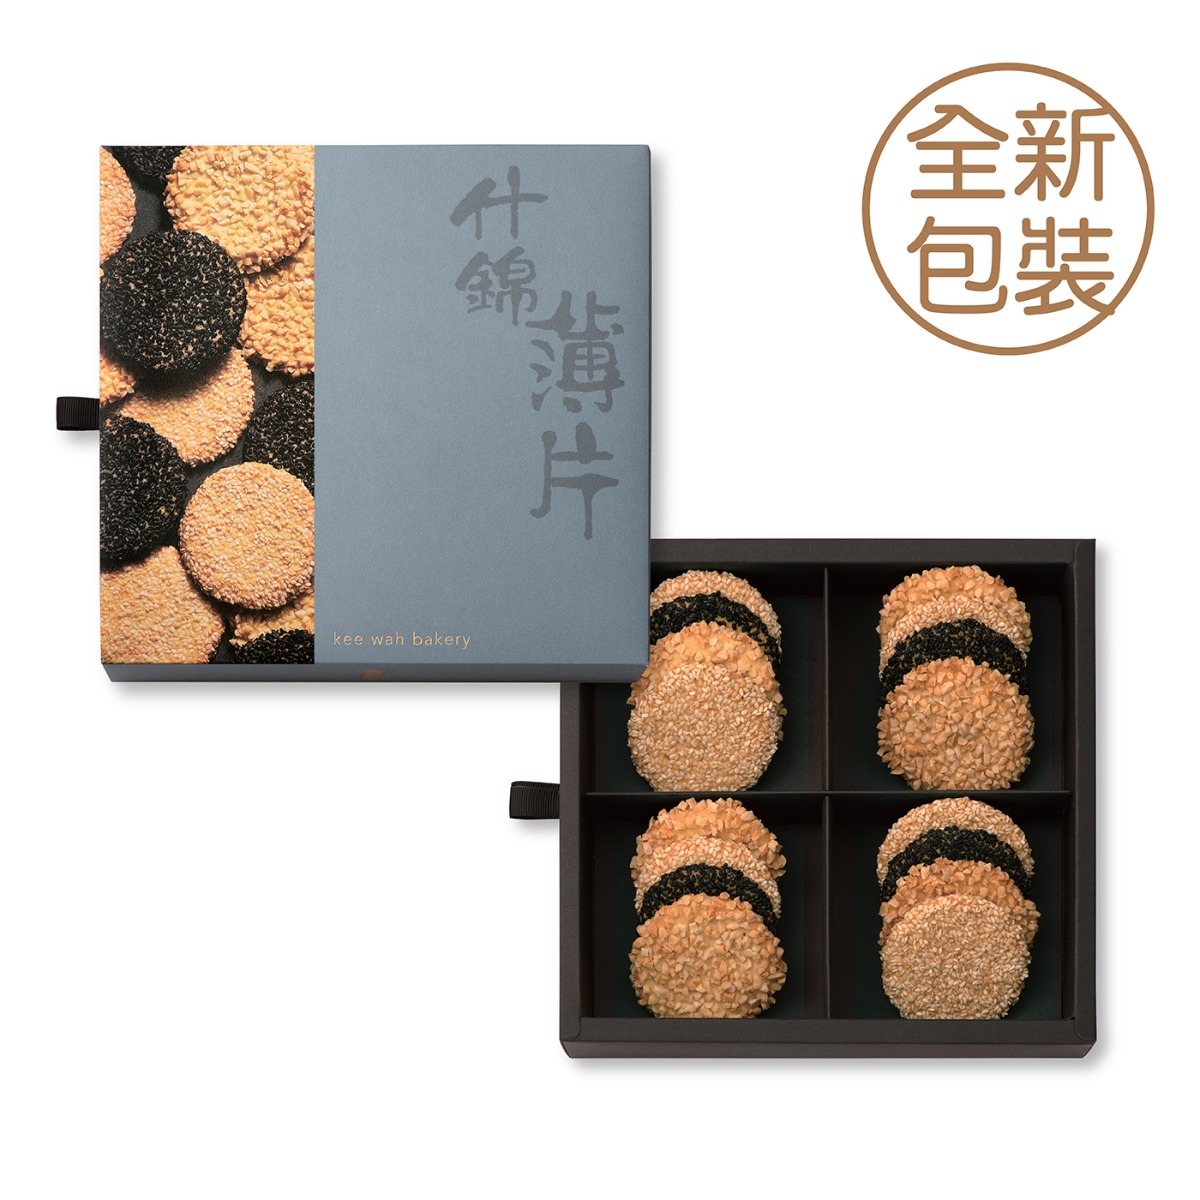 Butter Cookies Gift Box - 牛油曲奇禮盒- KeeWah.com